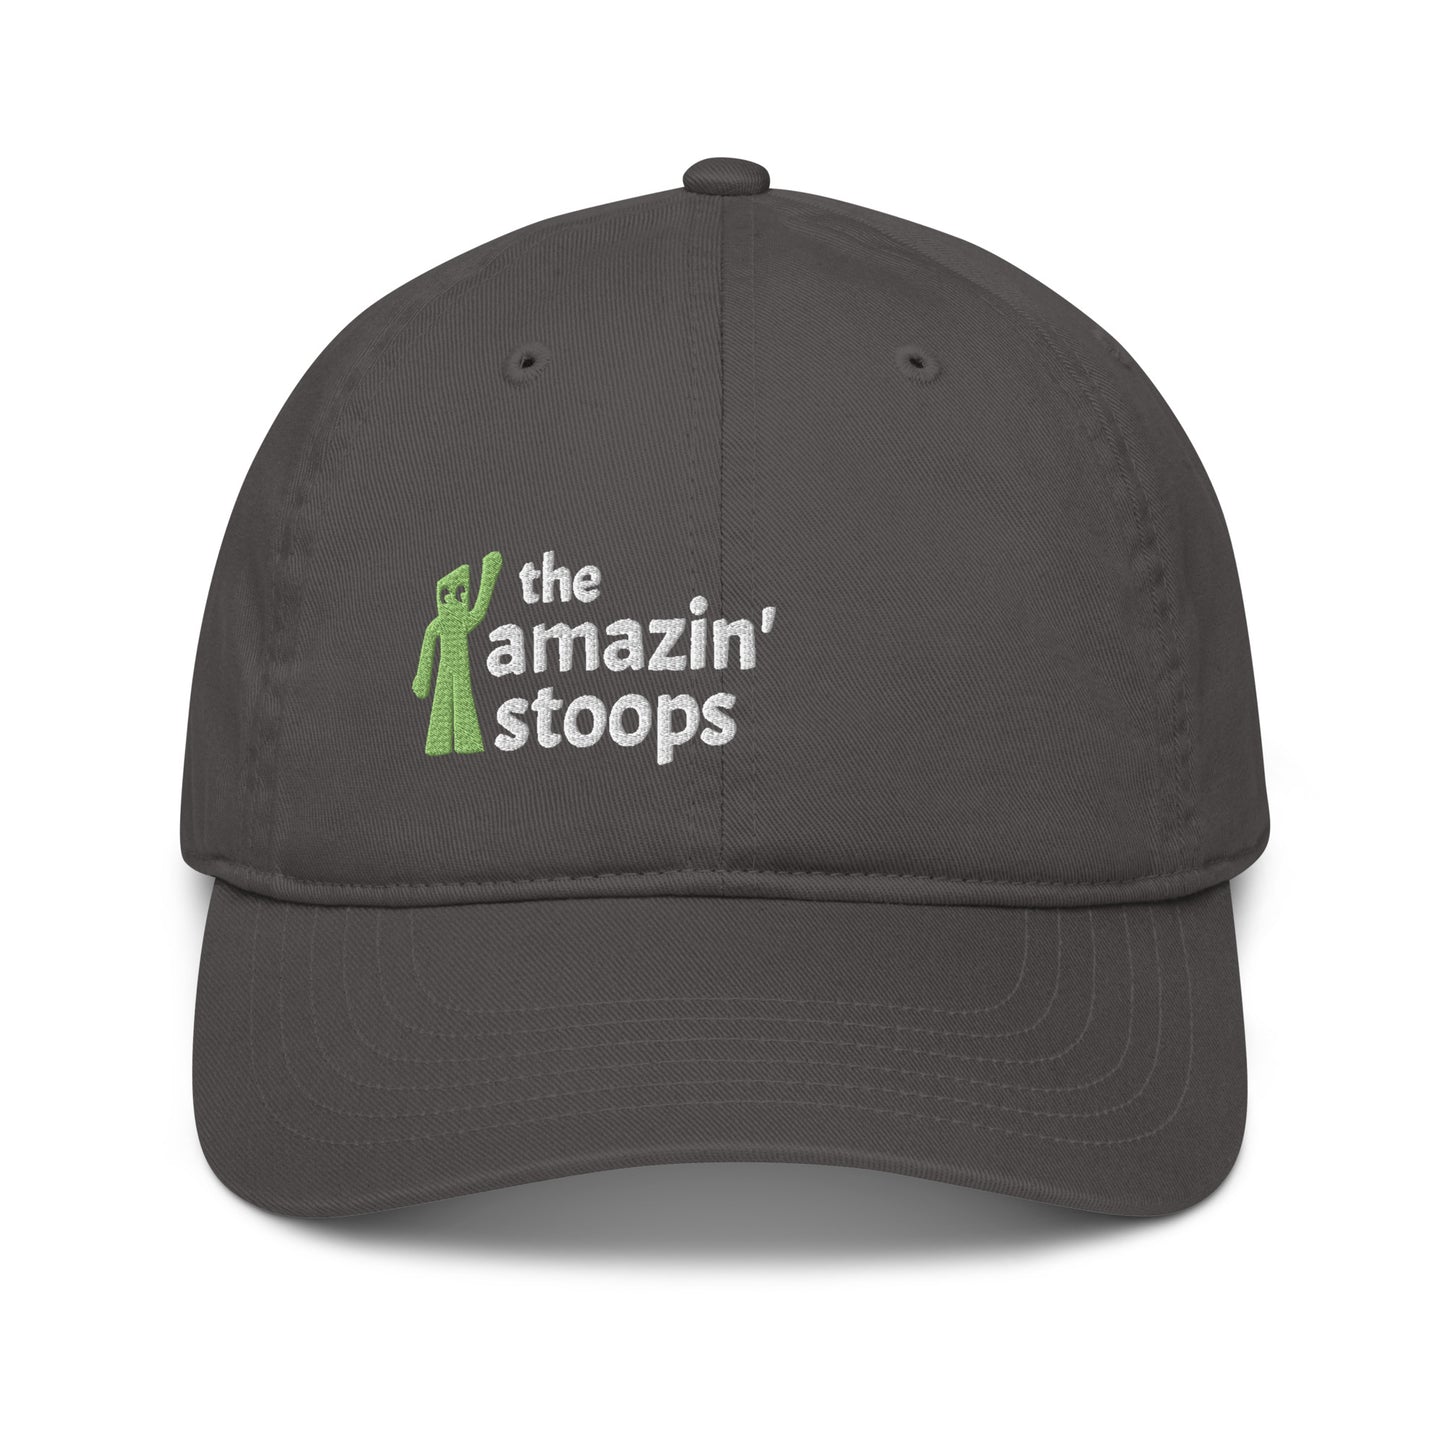 The Amazin' Stoops Hat